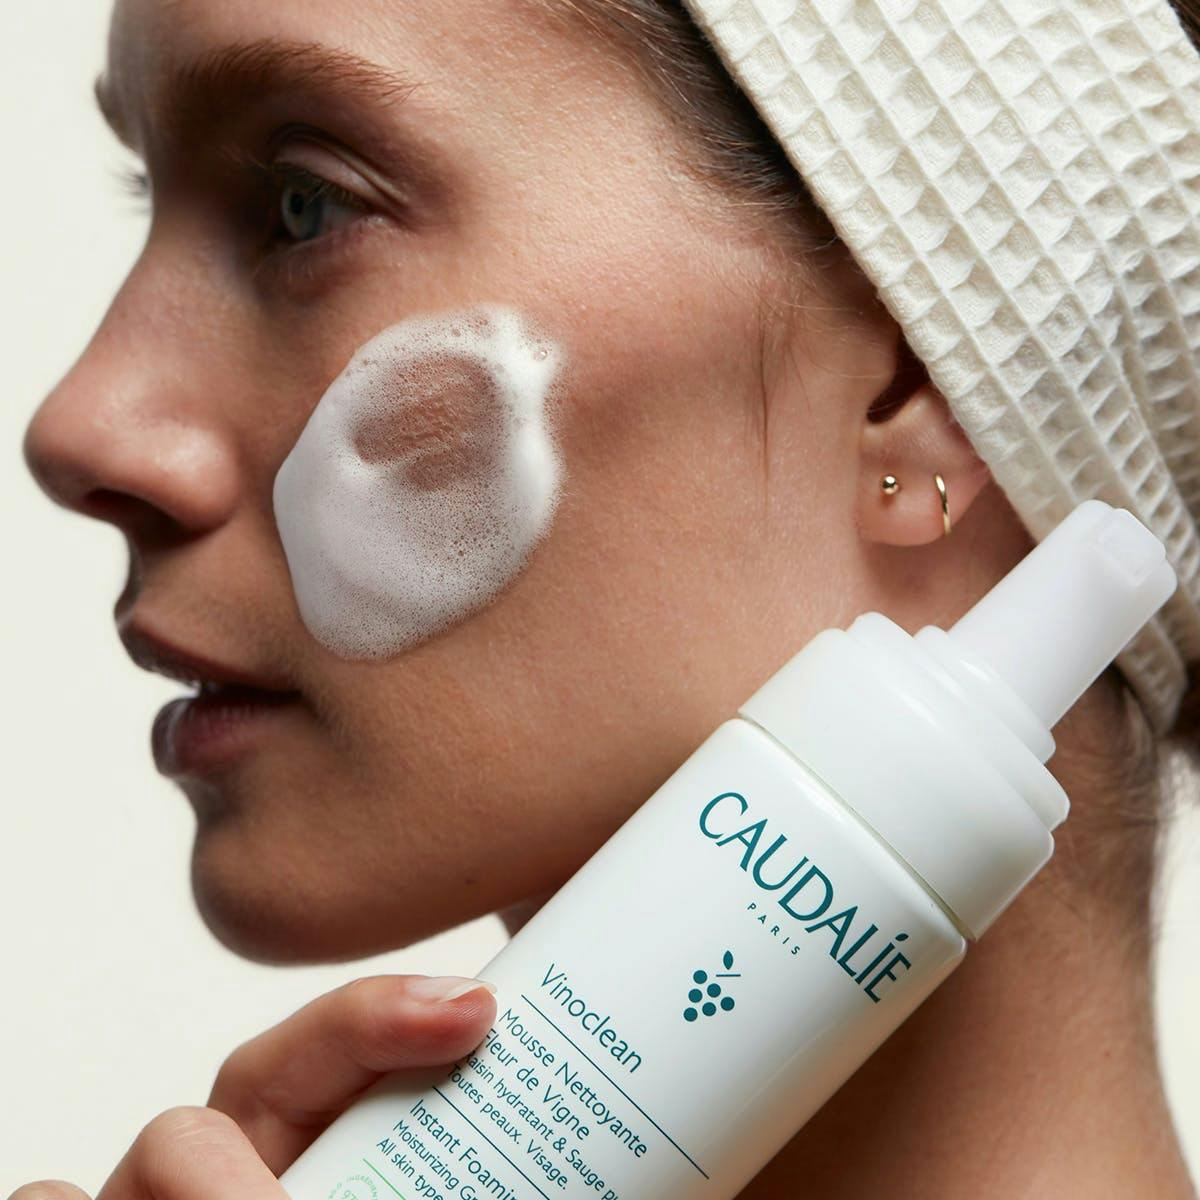 CAUDALIE: Natural Beauty Skincare ⋅ Face ⋅ Body ⋅ Spa - Caudalie